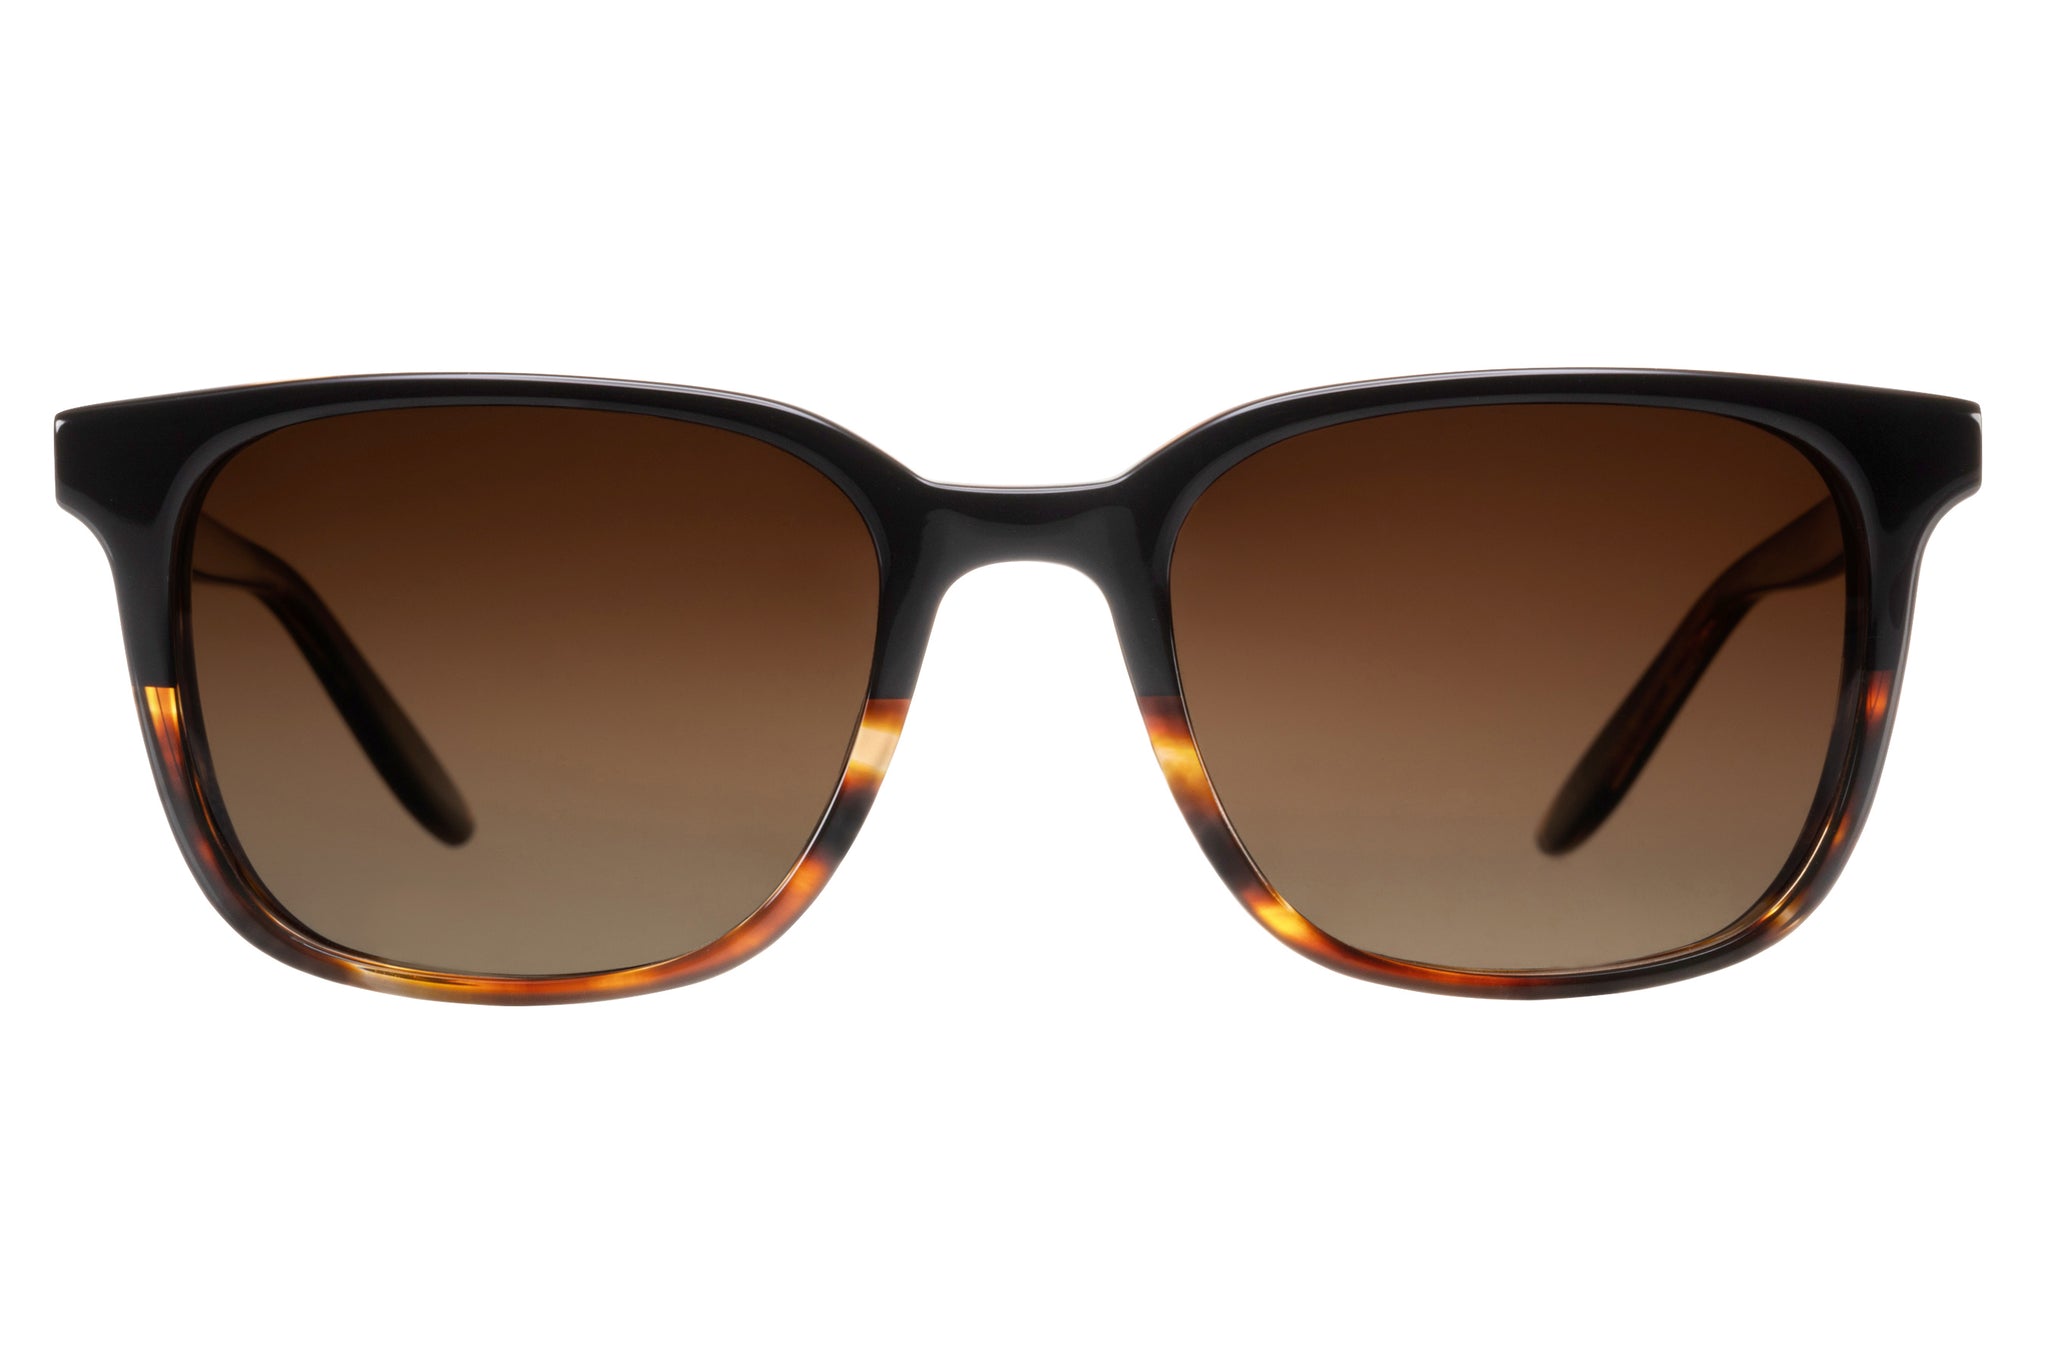 007 Joe Sunglasses Designer James Bond Glasses Barton Perreira